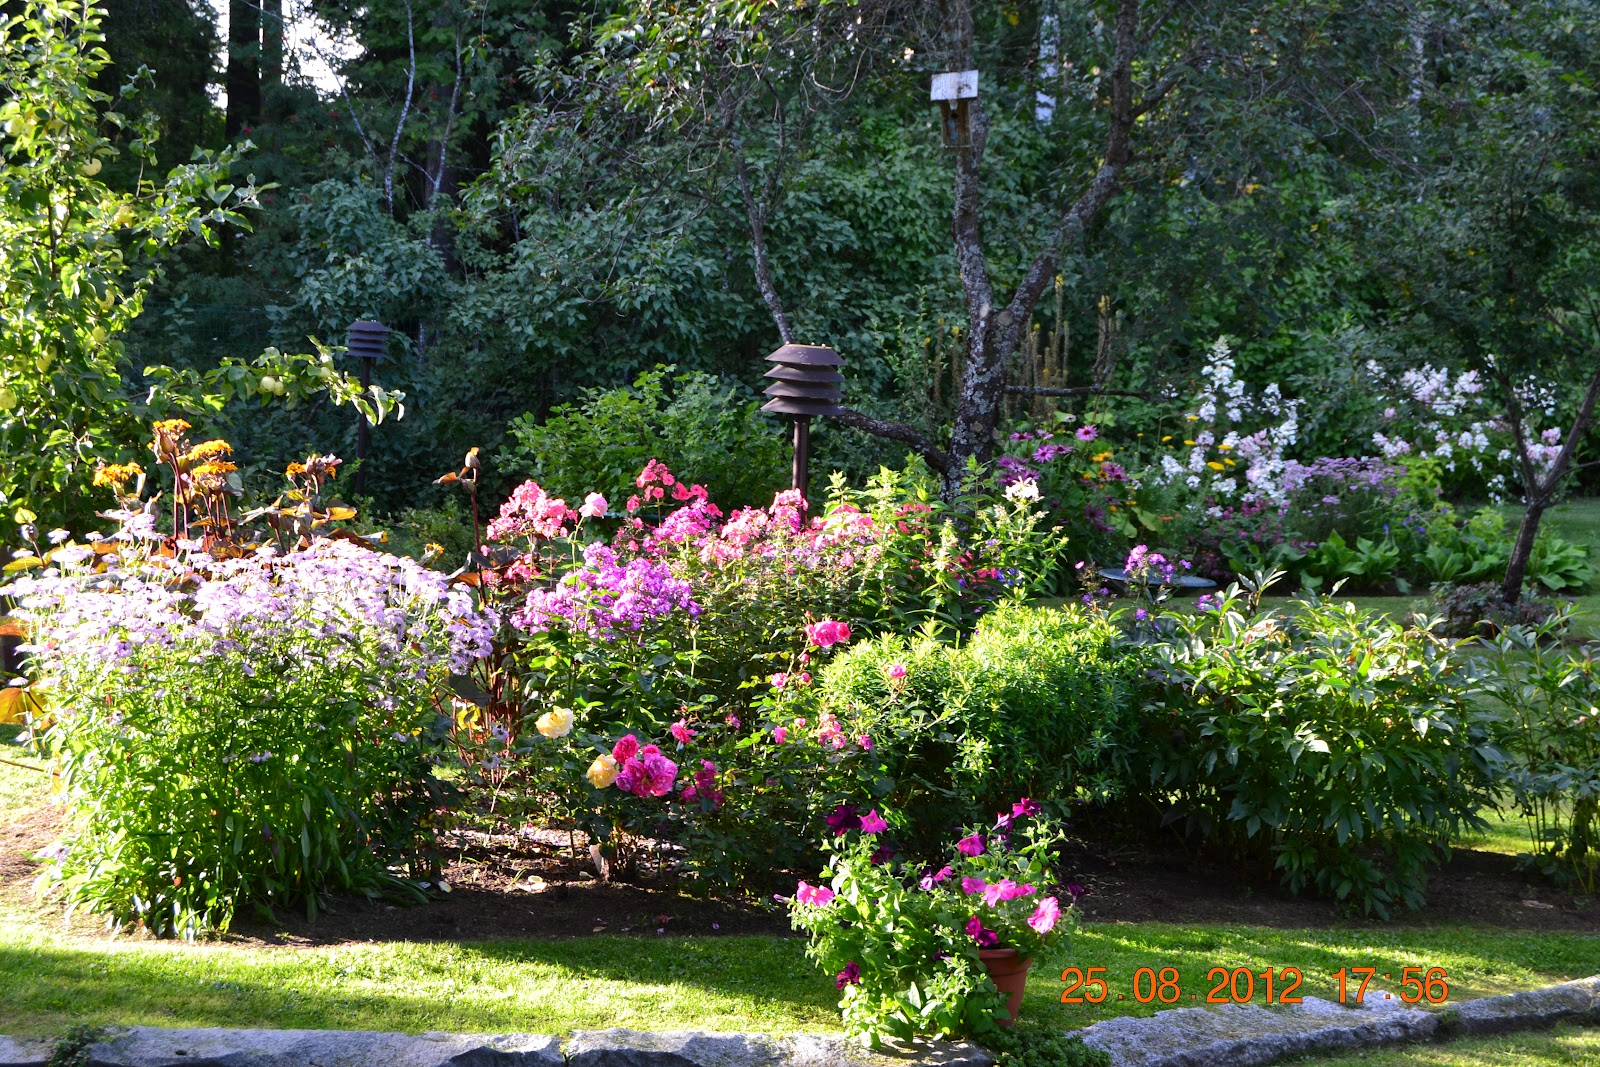 Aurinkoista puutarhanhoitoa – Some gardening in the sunshine